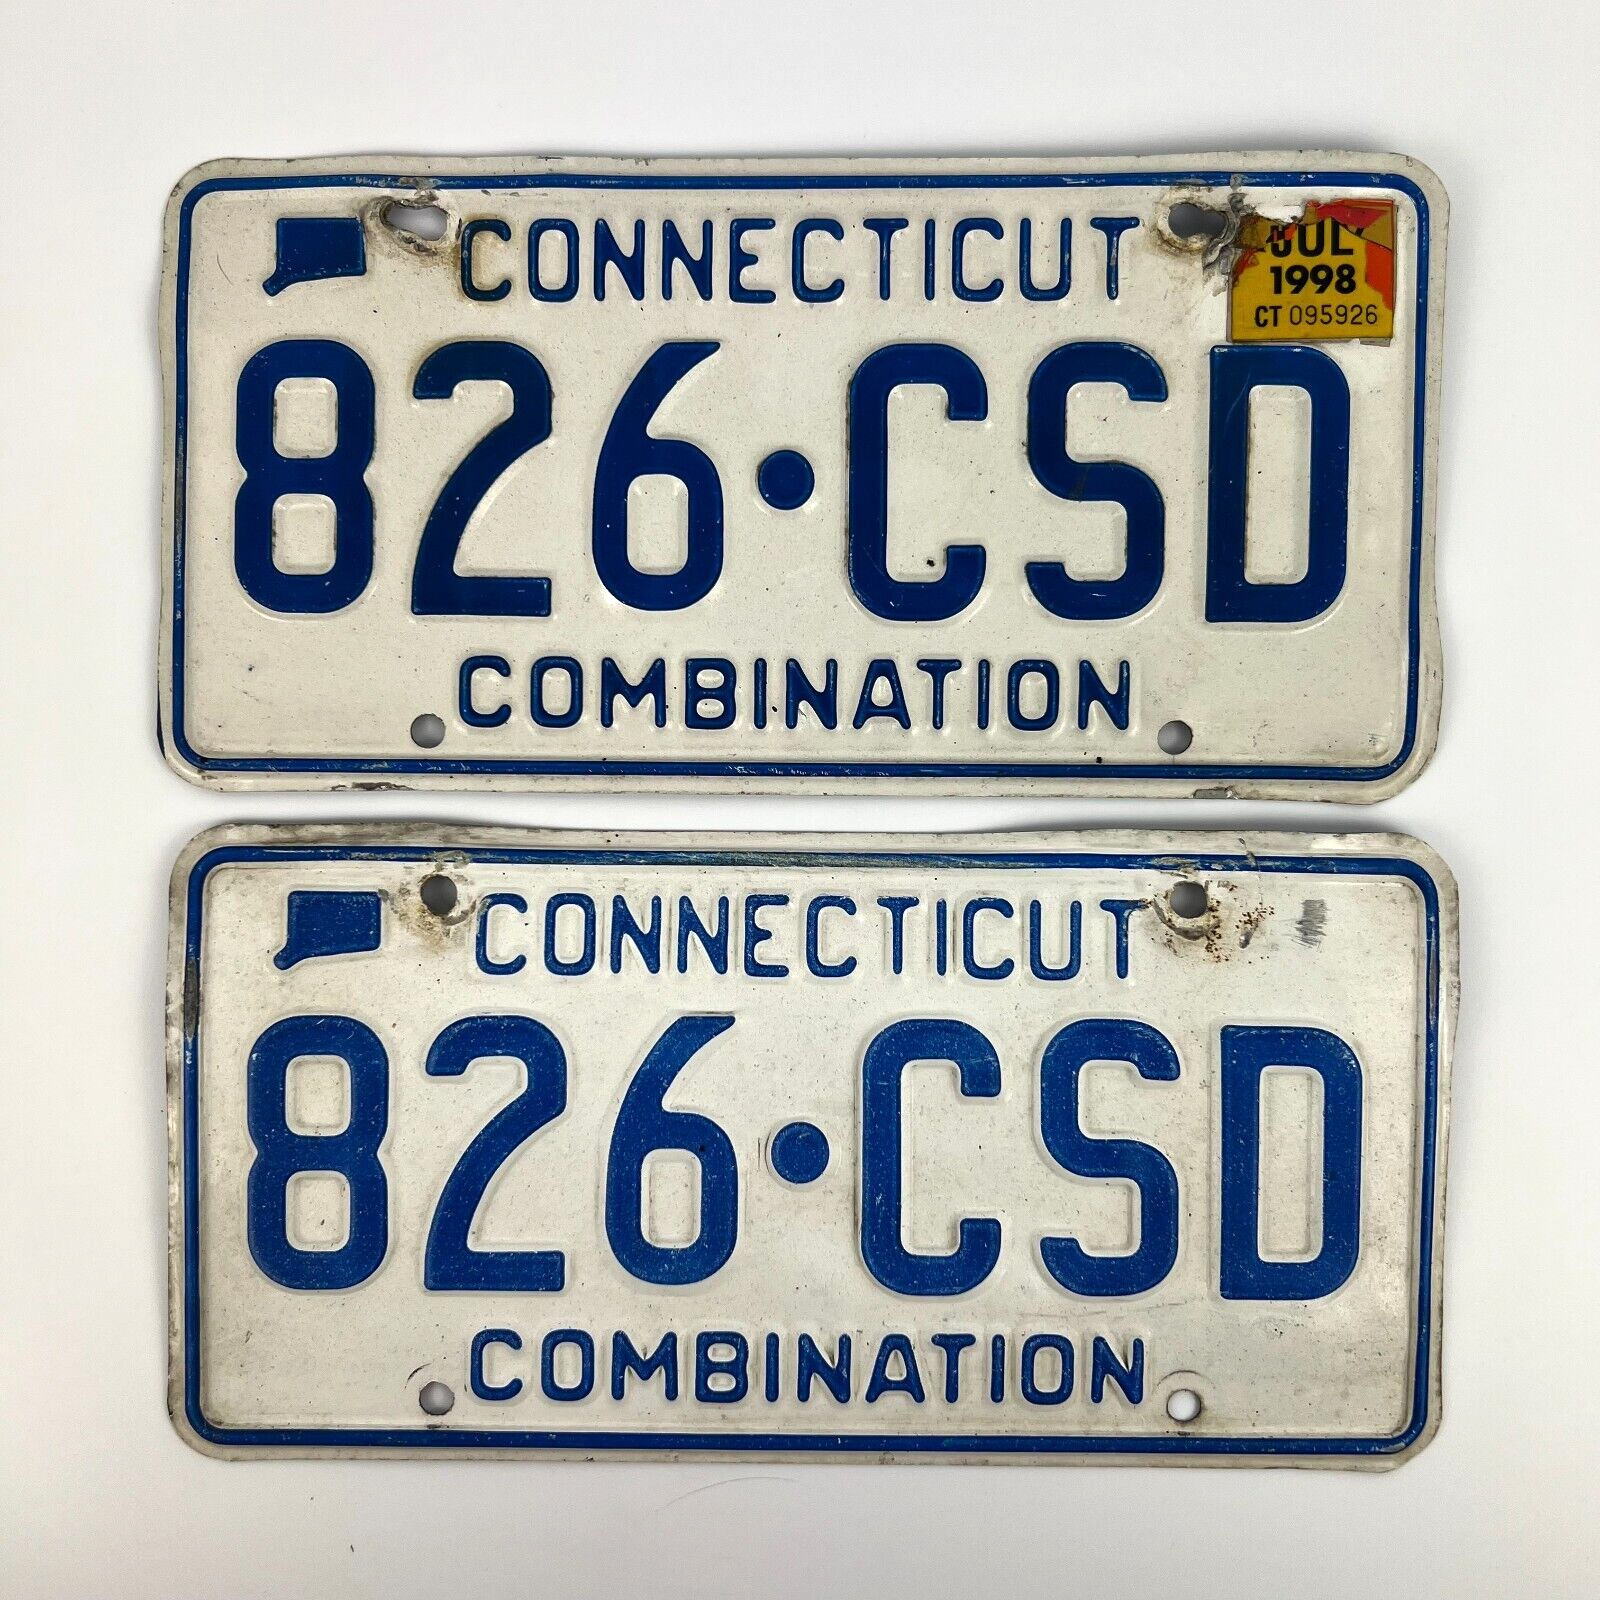 Vintage Connecticut License Plates Combination Pair 1998 White and Blue 826 CSD